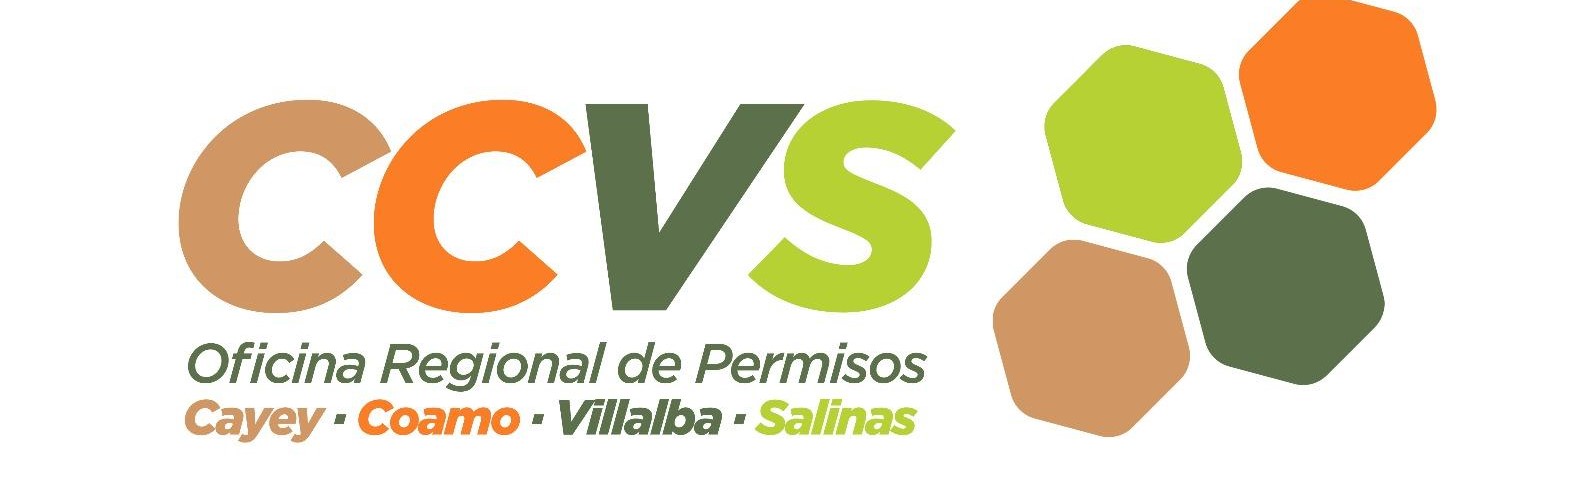 Logo Oficina Regional de Permisos